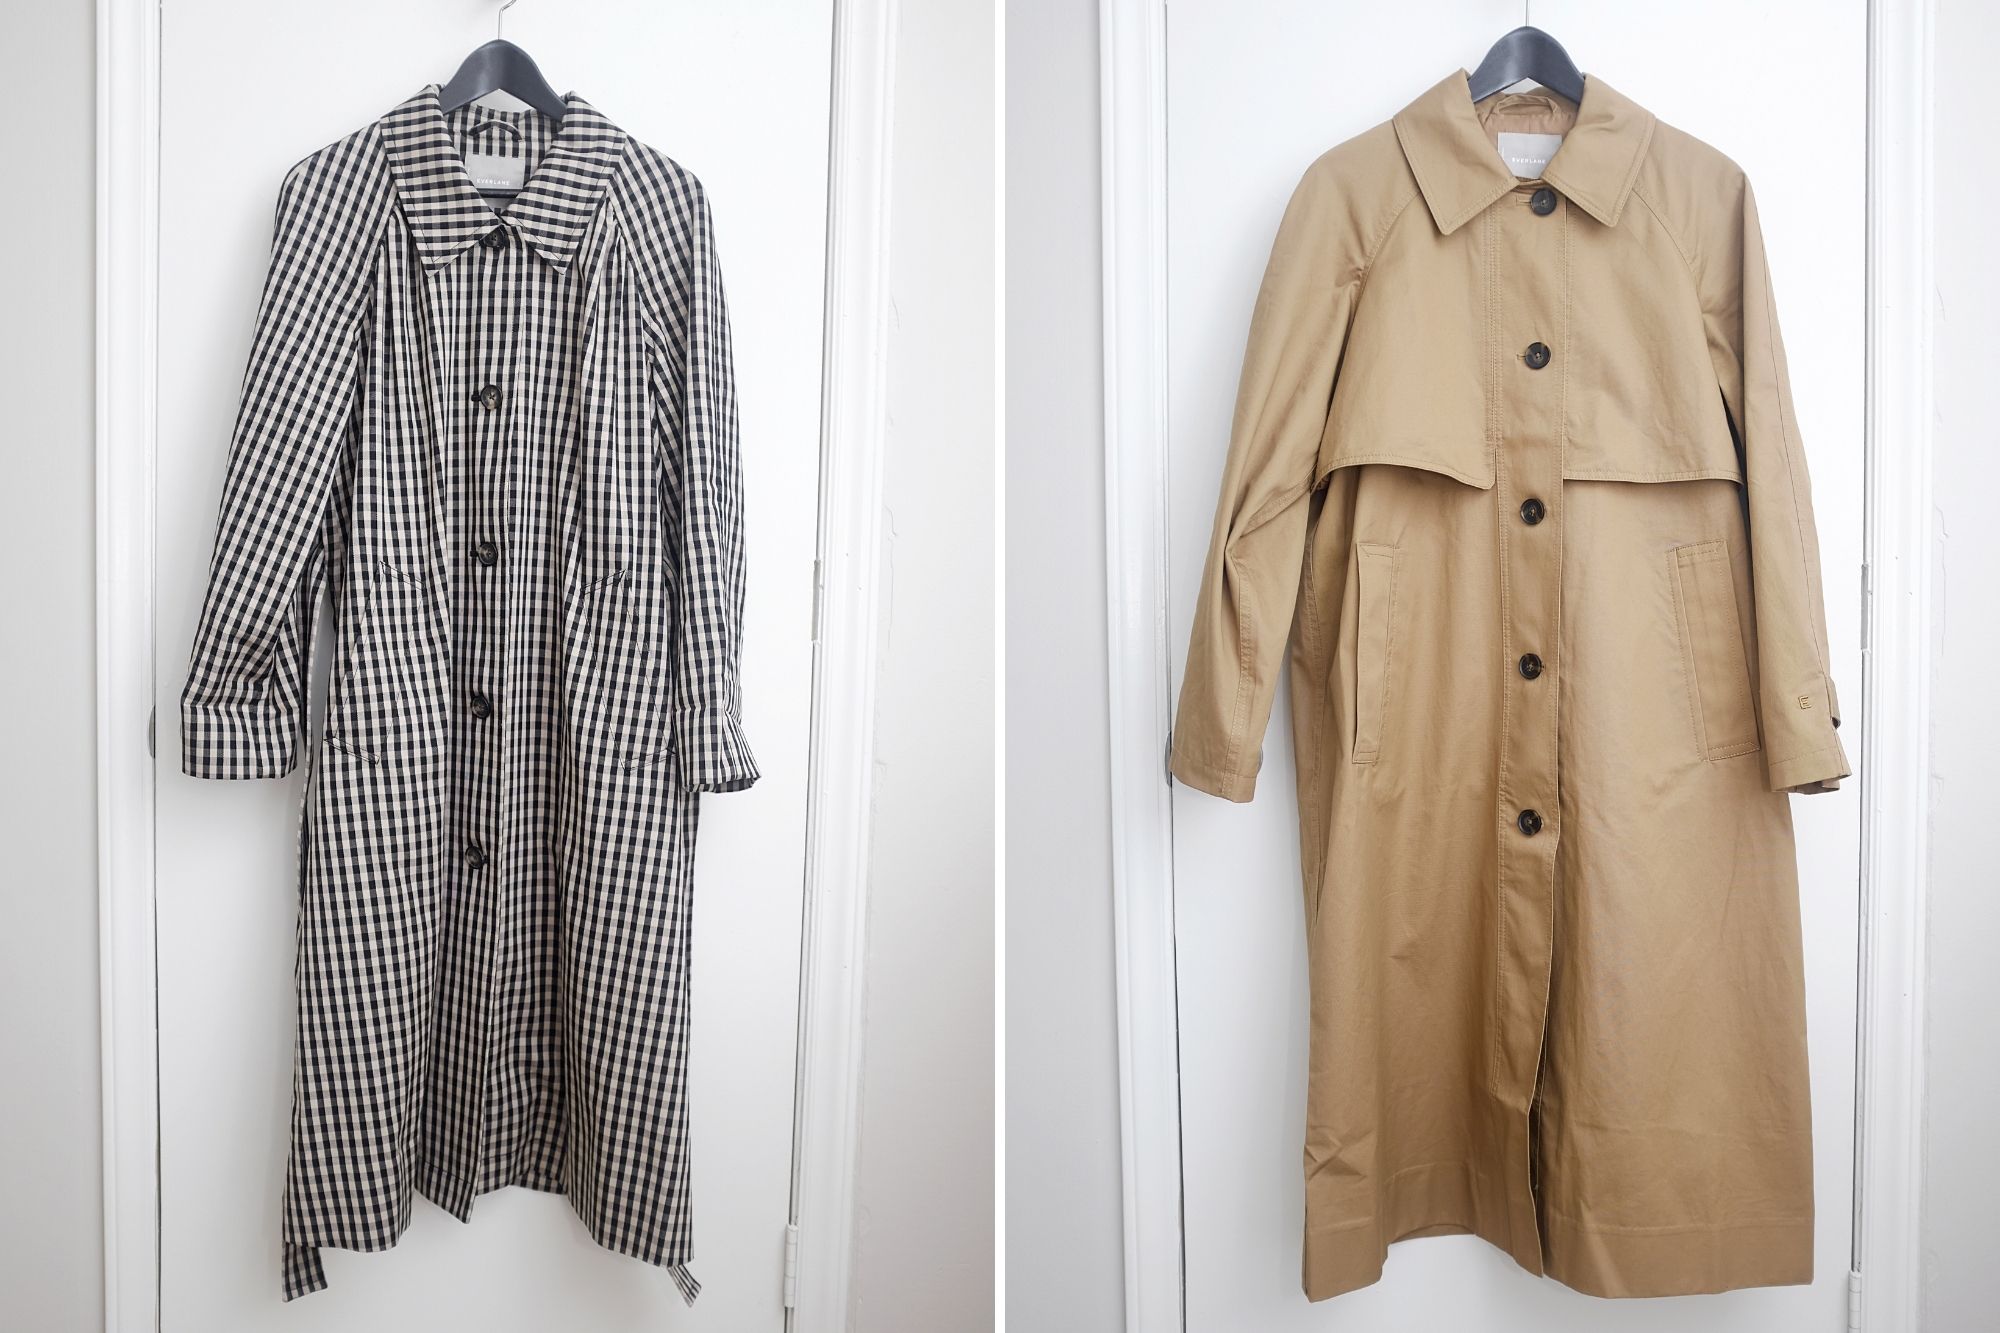 both trench coats hang on a closet door